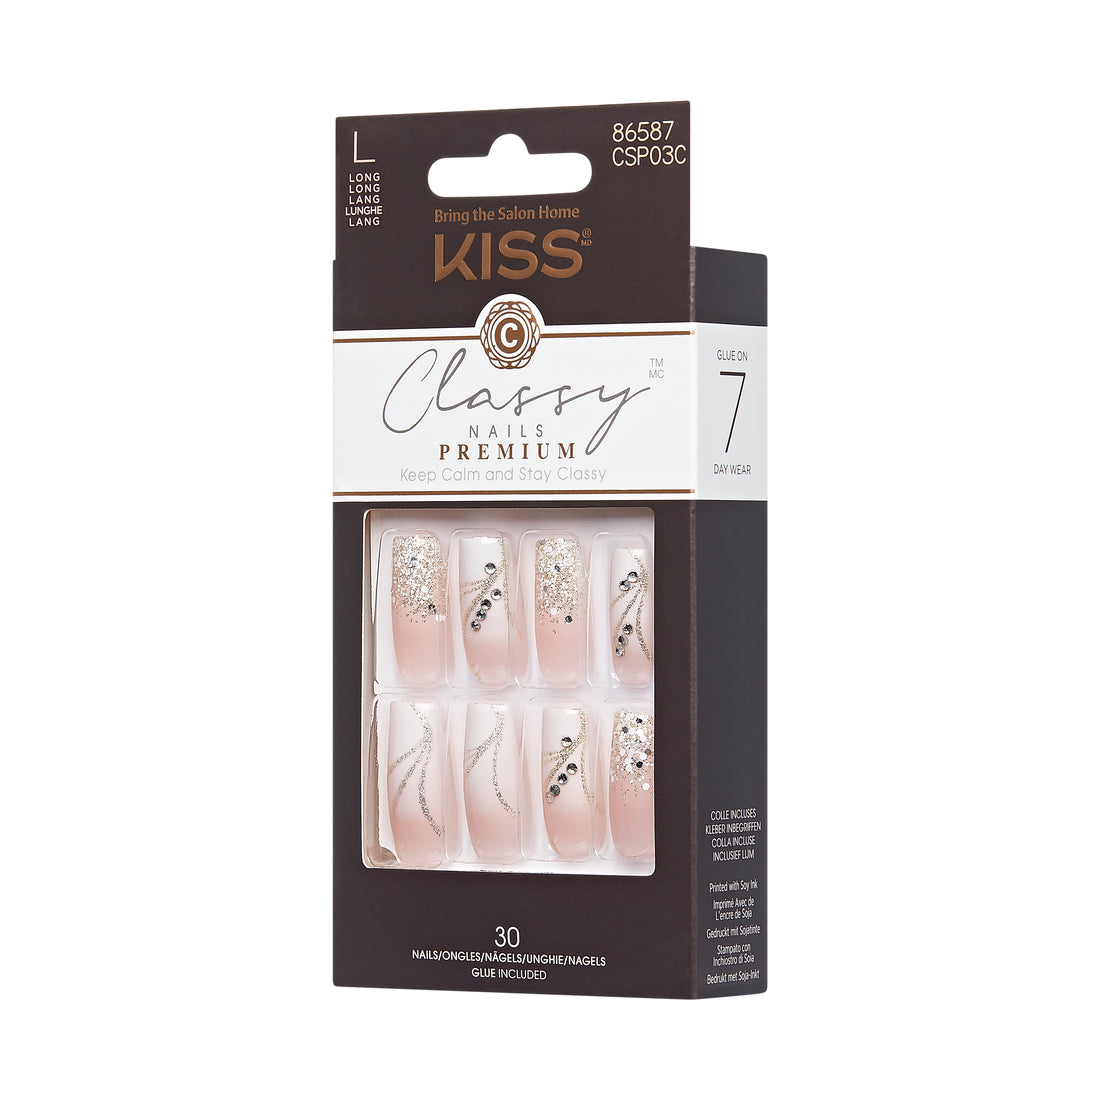 KISS Classy Nails Premium- Stunning!